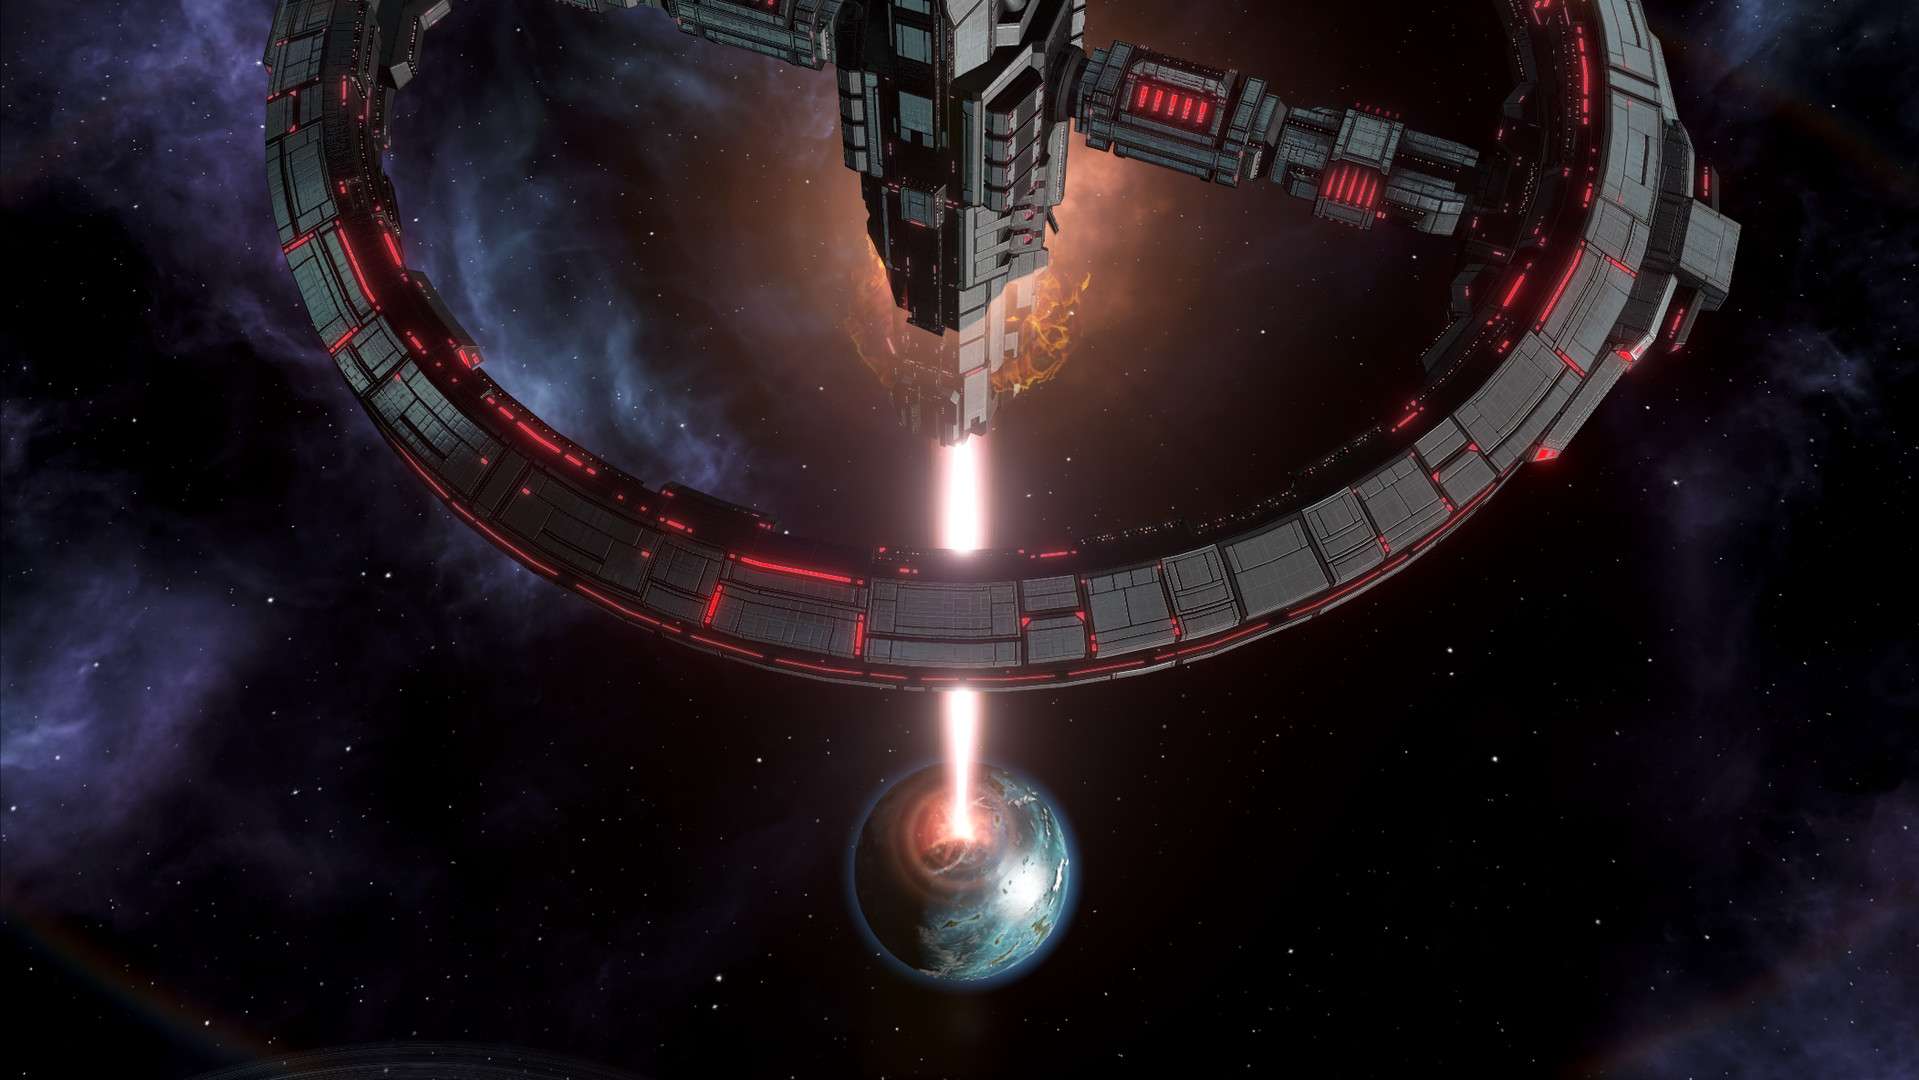 Stellaris - Ascension Pack DLC Steam CD Key